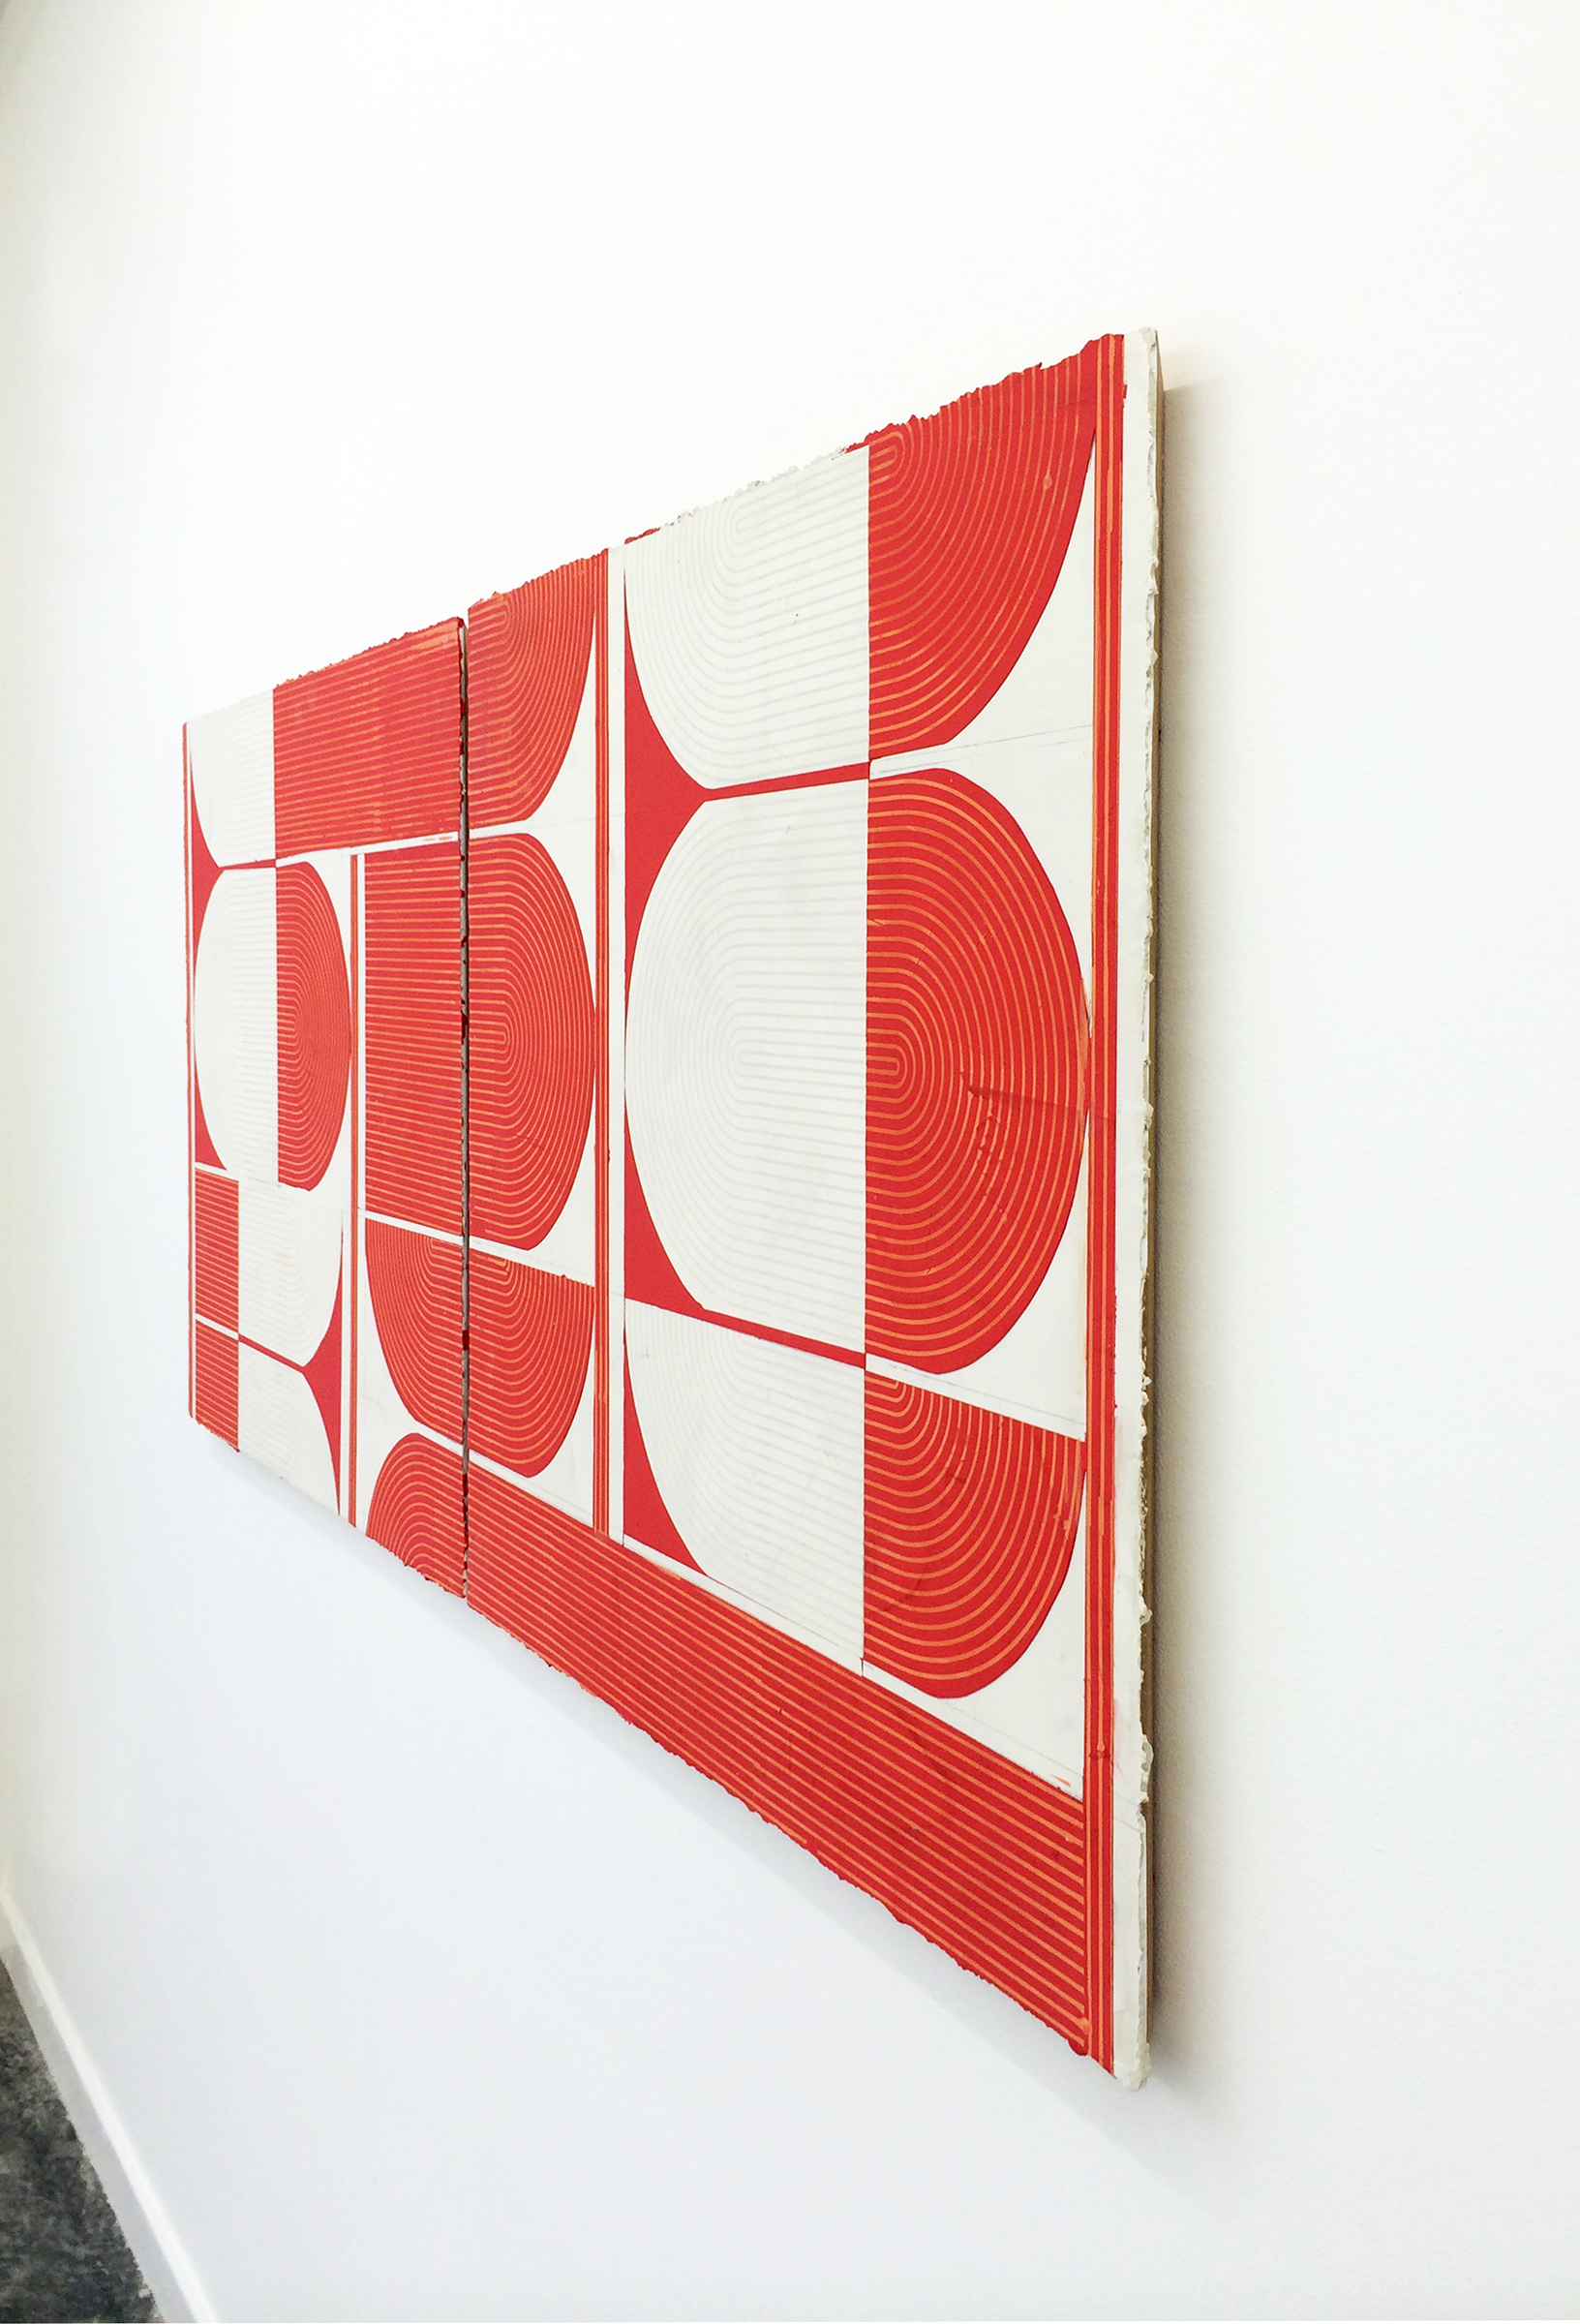   ELISE FERGUSON  (profile) &nbsp;Deuce , 2016, pigmented plaster on panel, 30" x 61" 